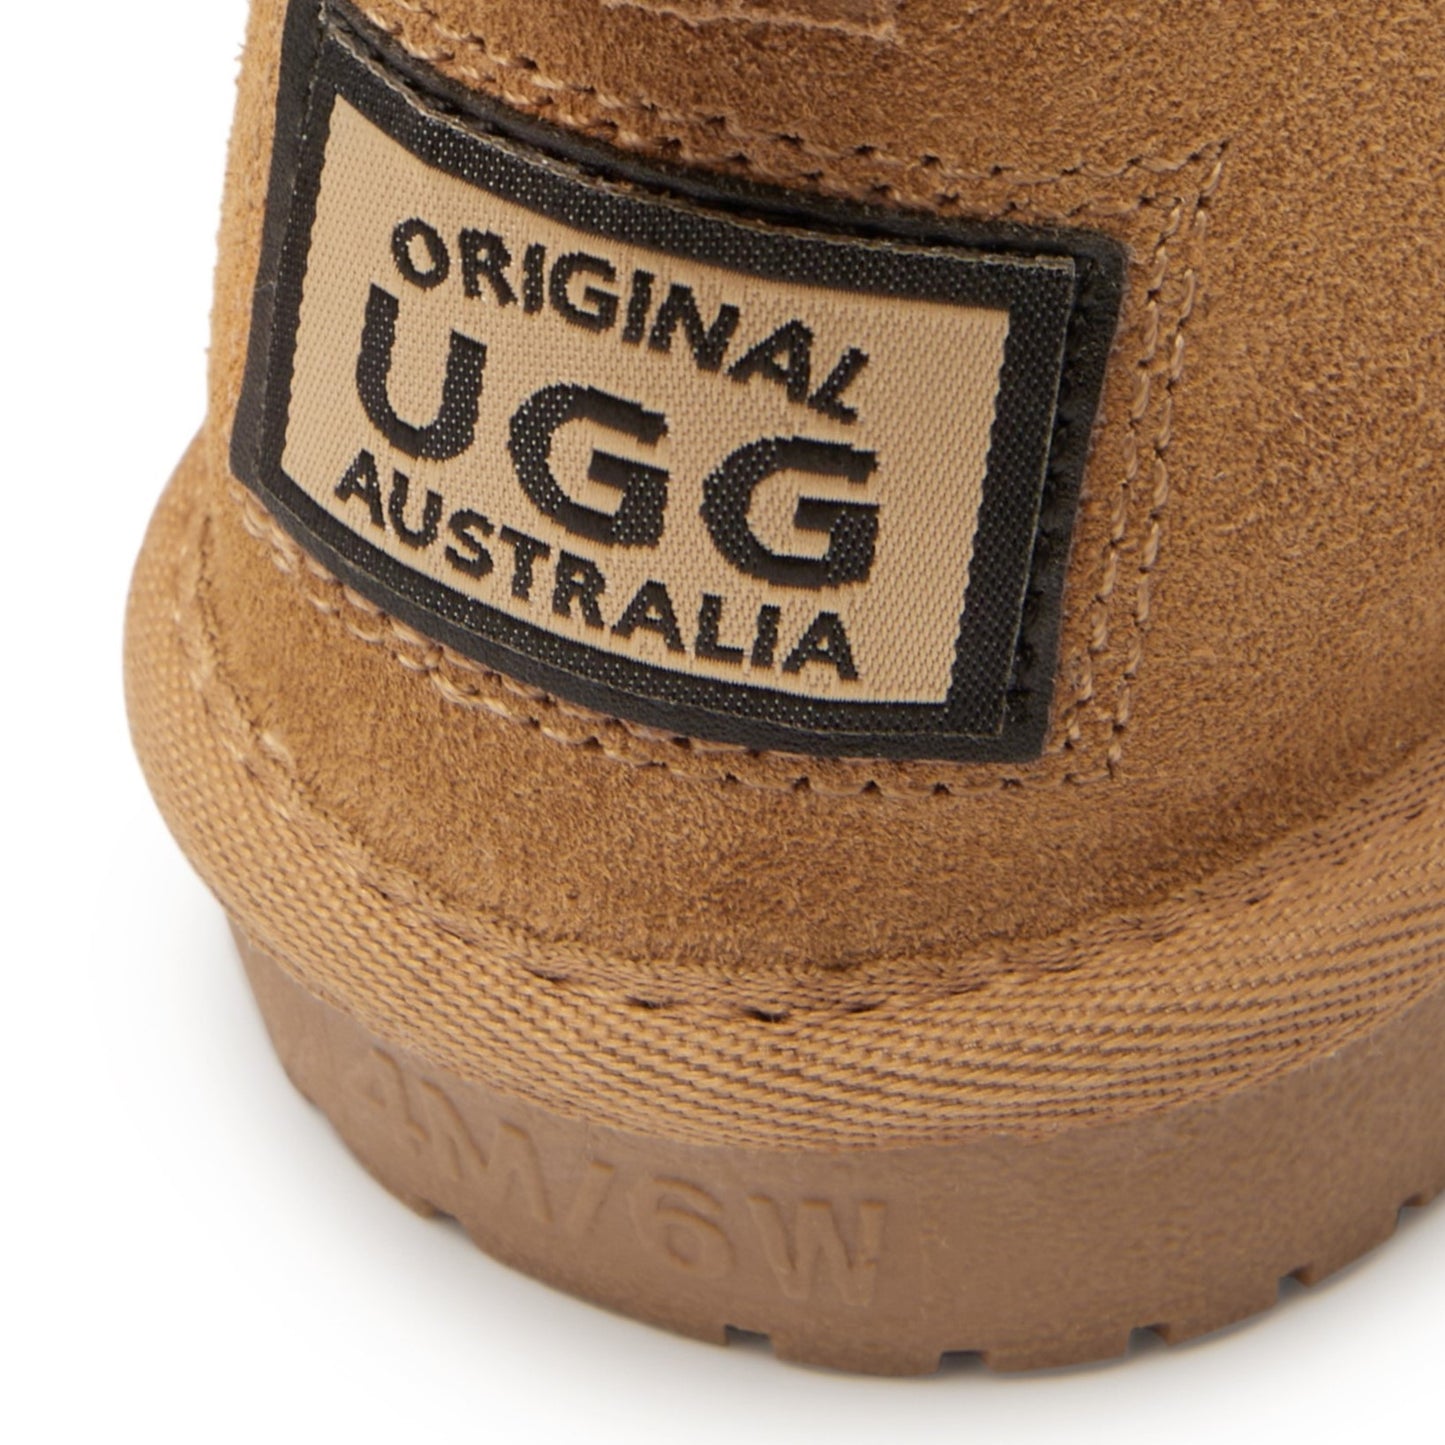 Originals Ugg Australia Mid Tab Boots Chestnut